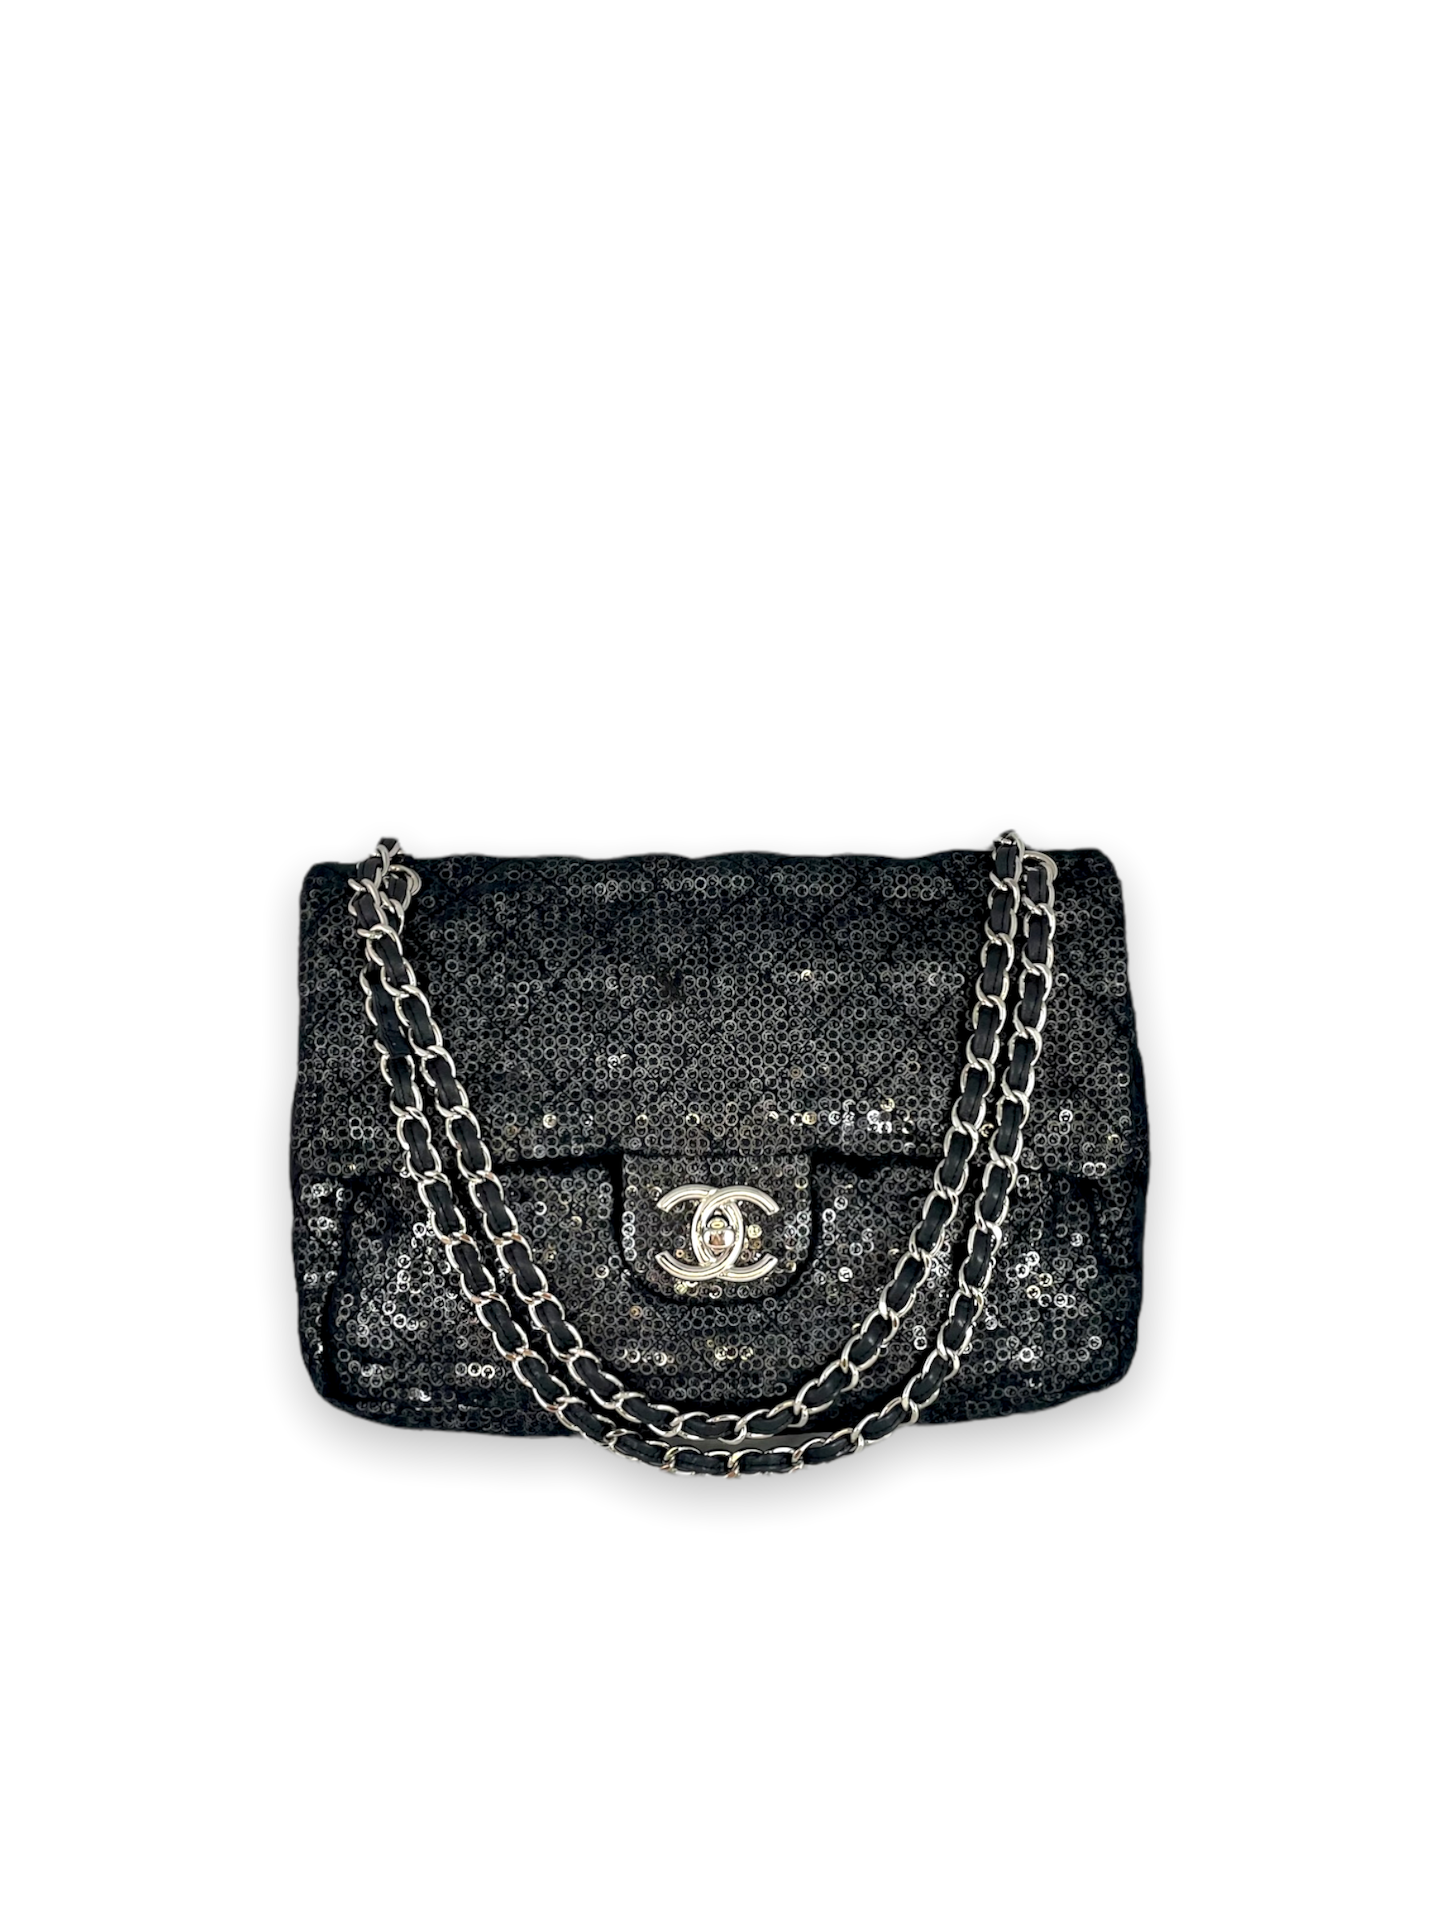 chanel black and white handbag new